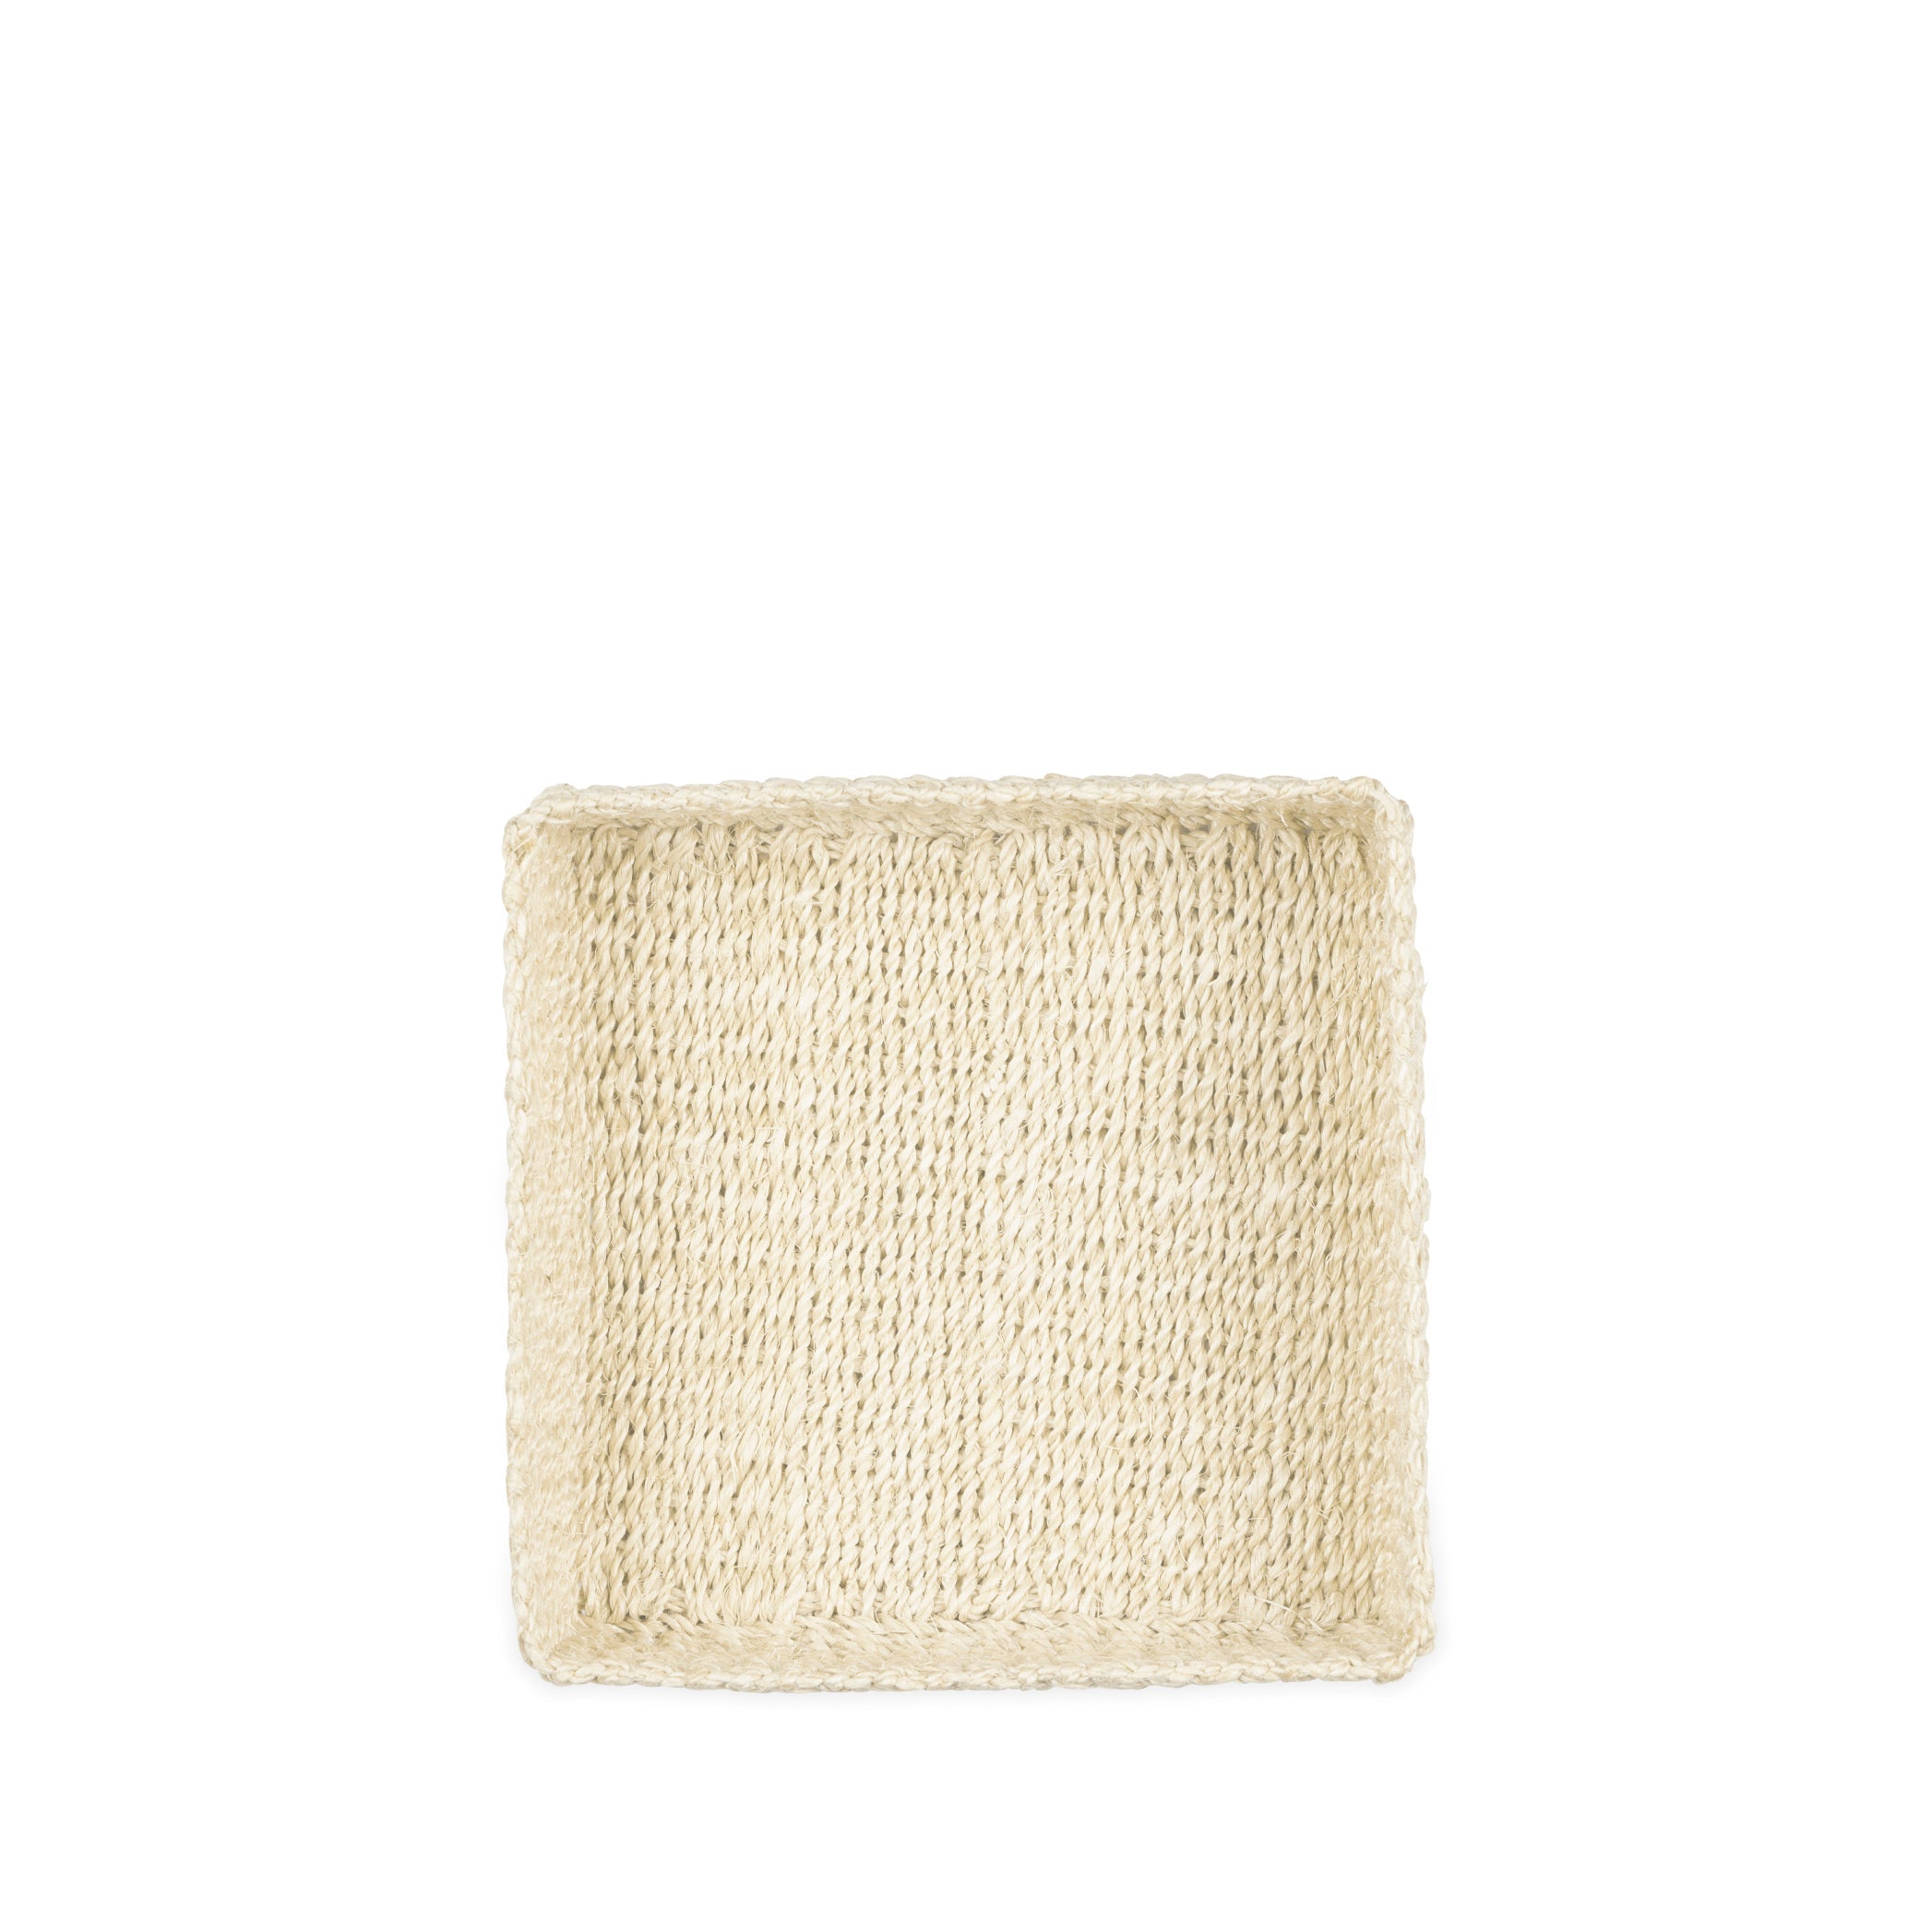 Abaca Woven Napkin Holder in Cream